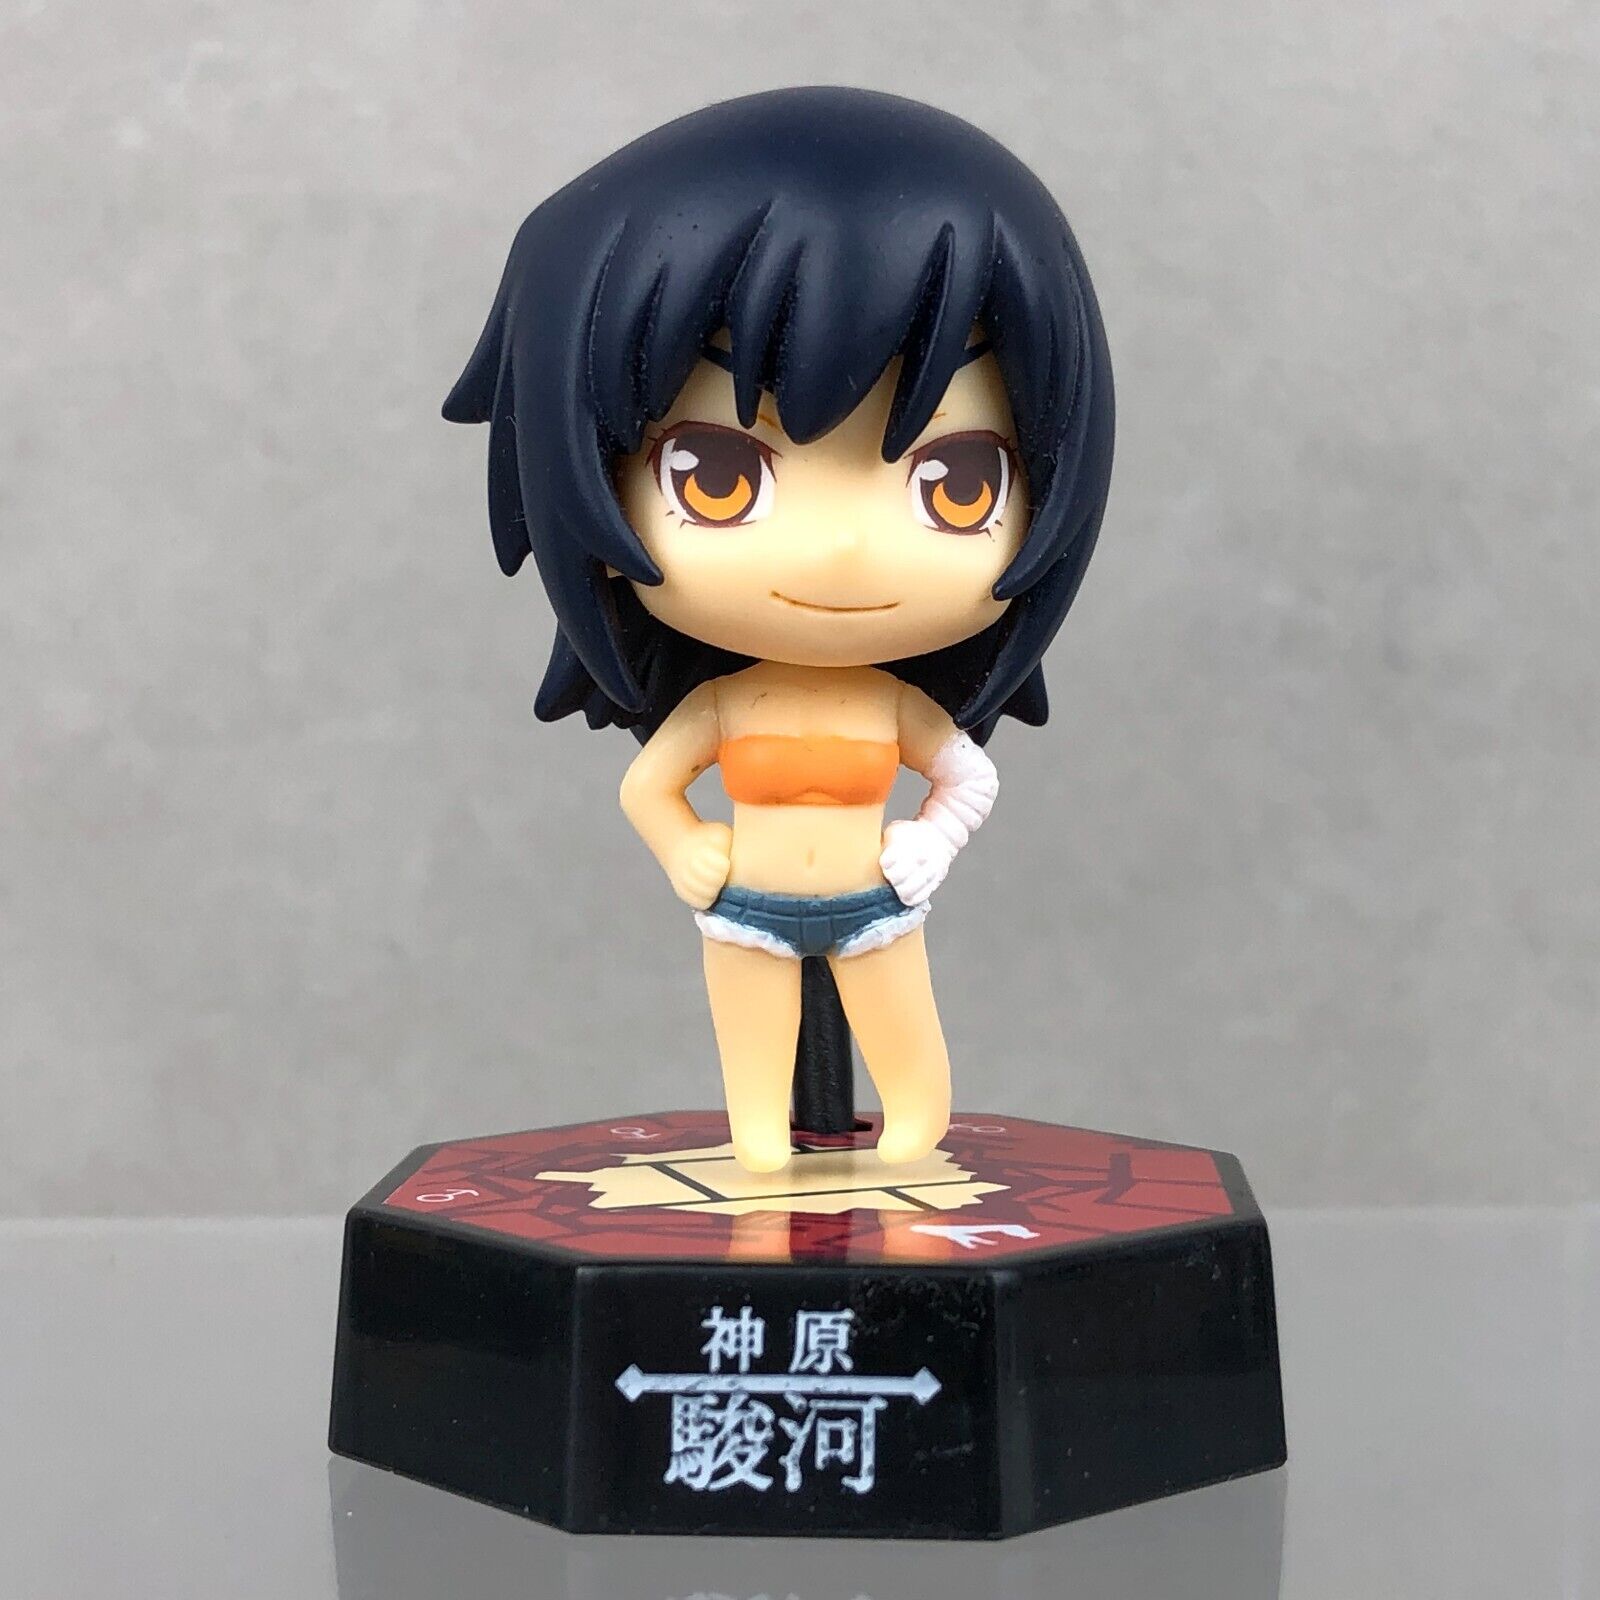 Bandai Nisemonogatari Kanbaru Suruga Collectage Anime Figure Japan Import